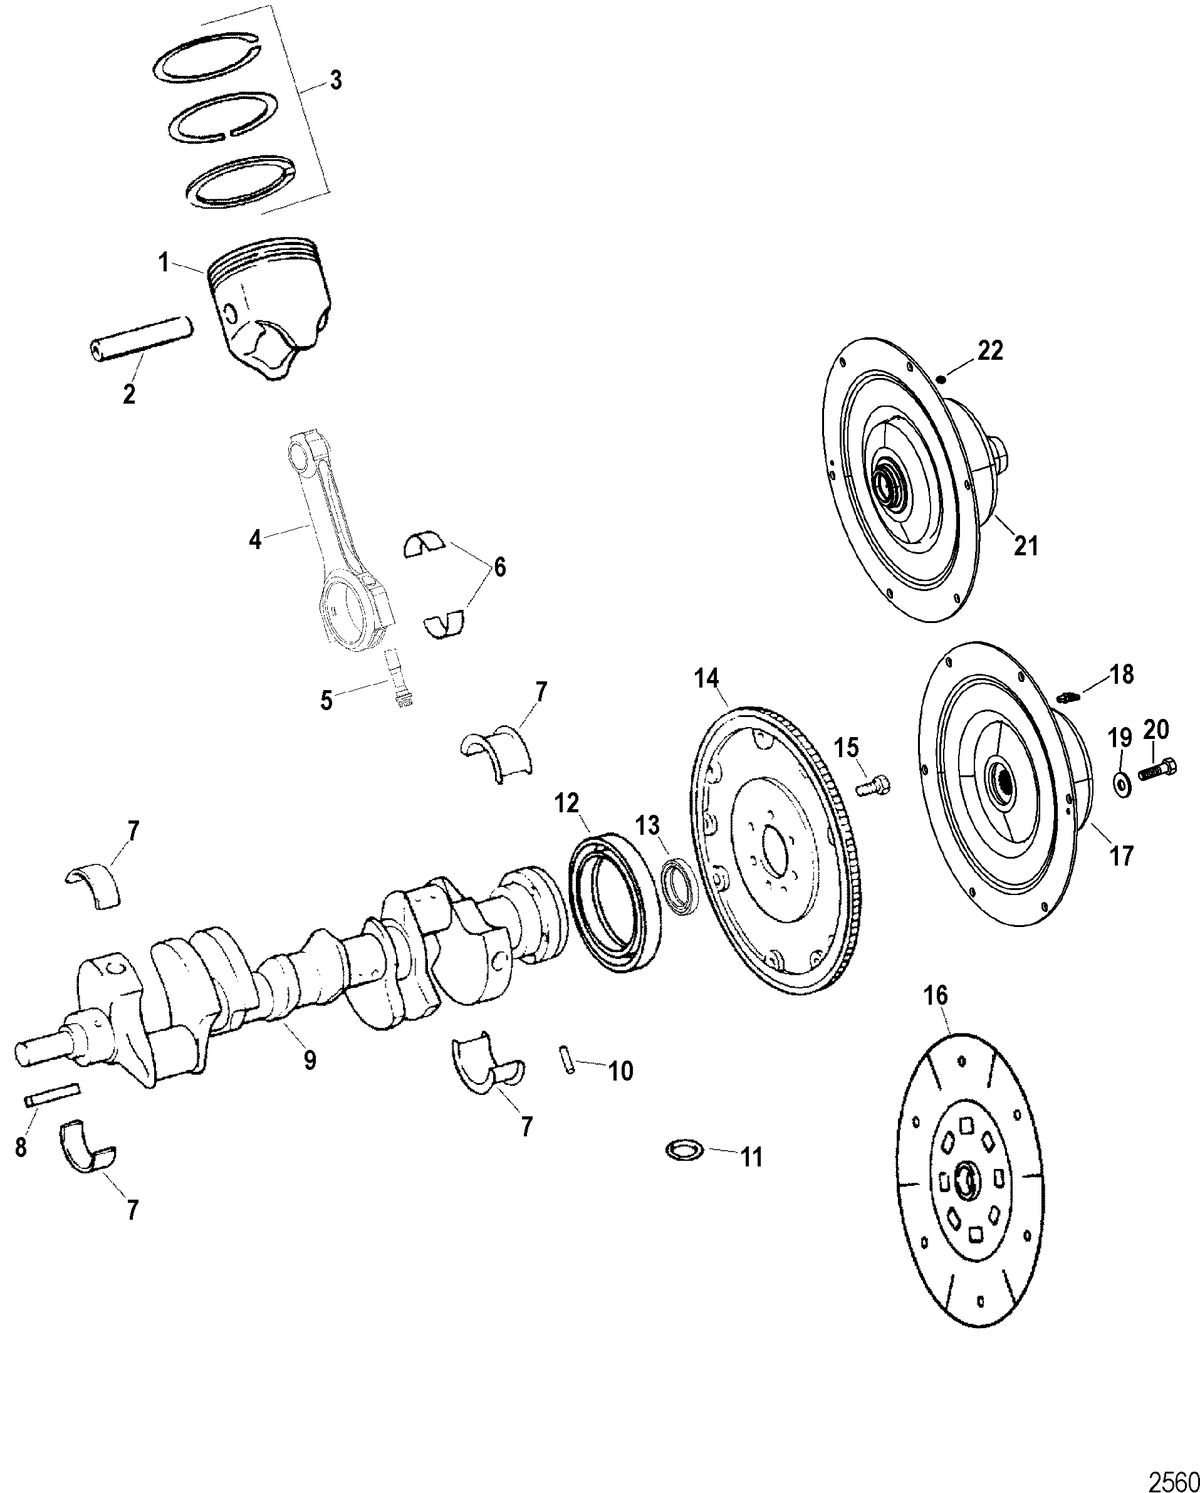 RACE STERNDRIVE 575 SCI Crankshaft / Piston And Coupler Components